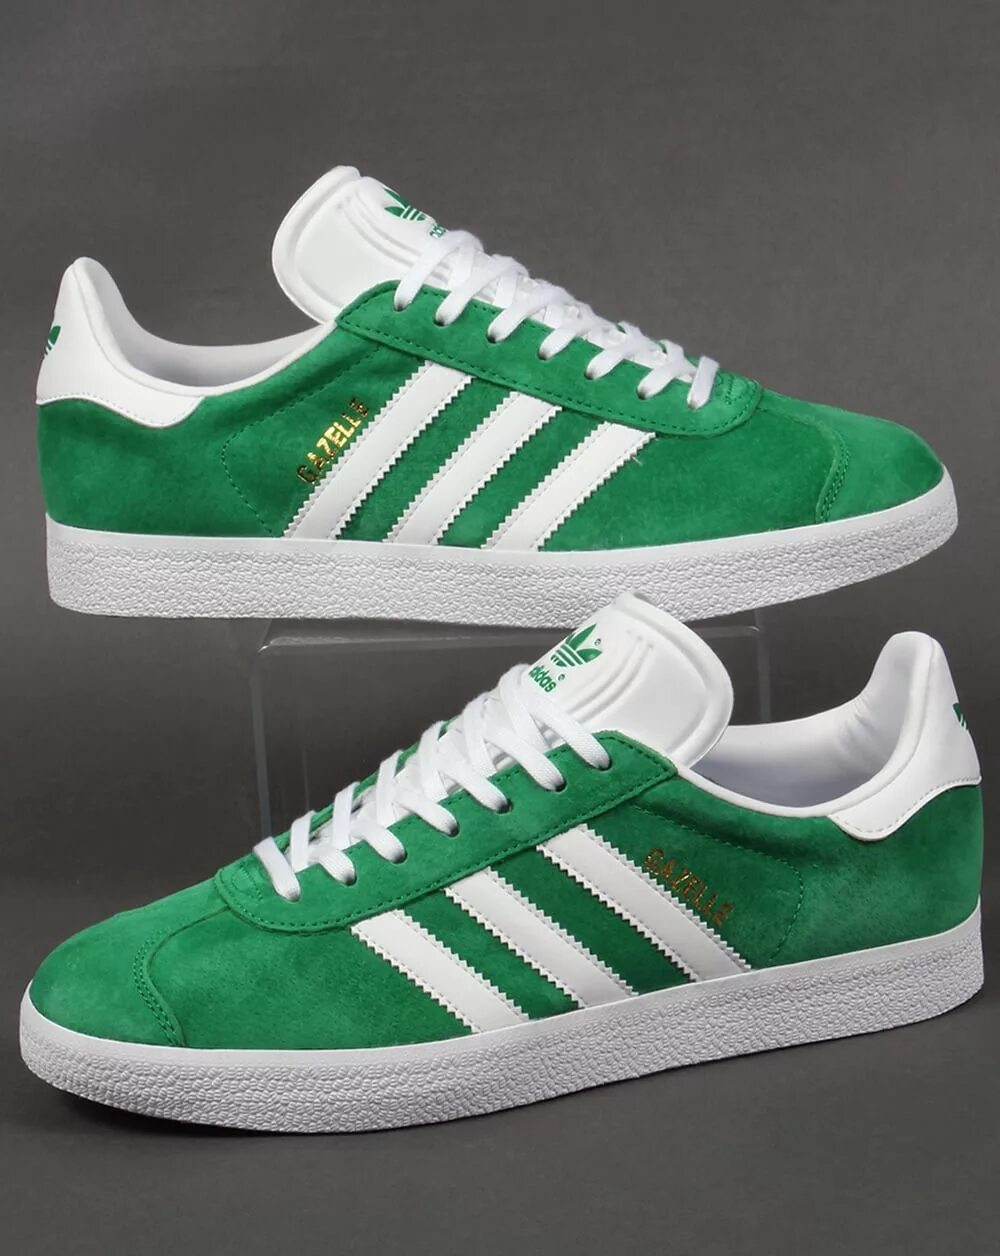 Кроссовки adidas Gazelle Green. Adidas Gazelle White Green. Adidas Gazelle зеленые. Кеды adidas Originals Gazelle Green. Зеленые кроссовки adidas